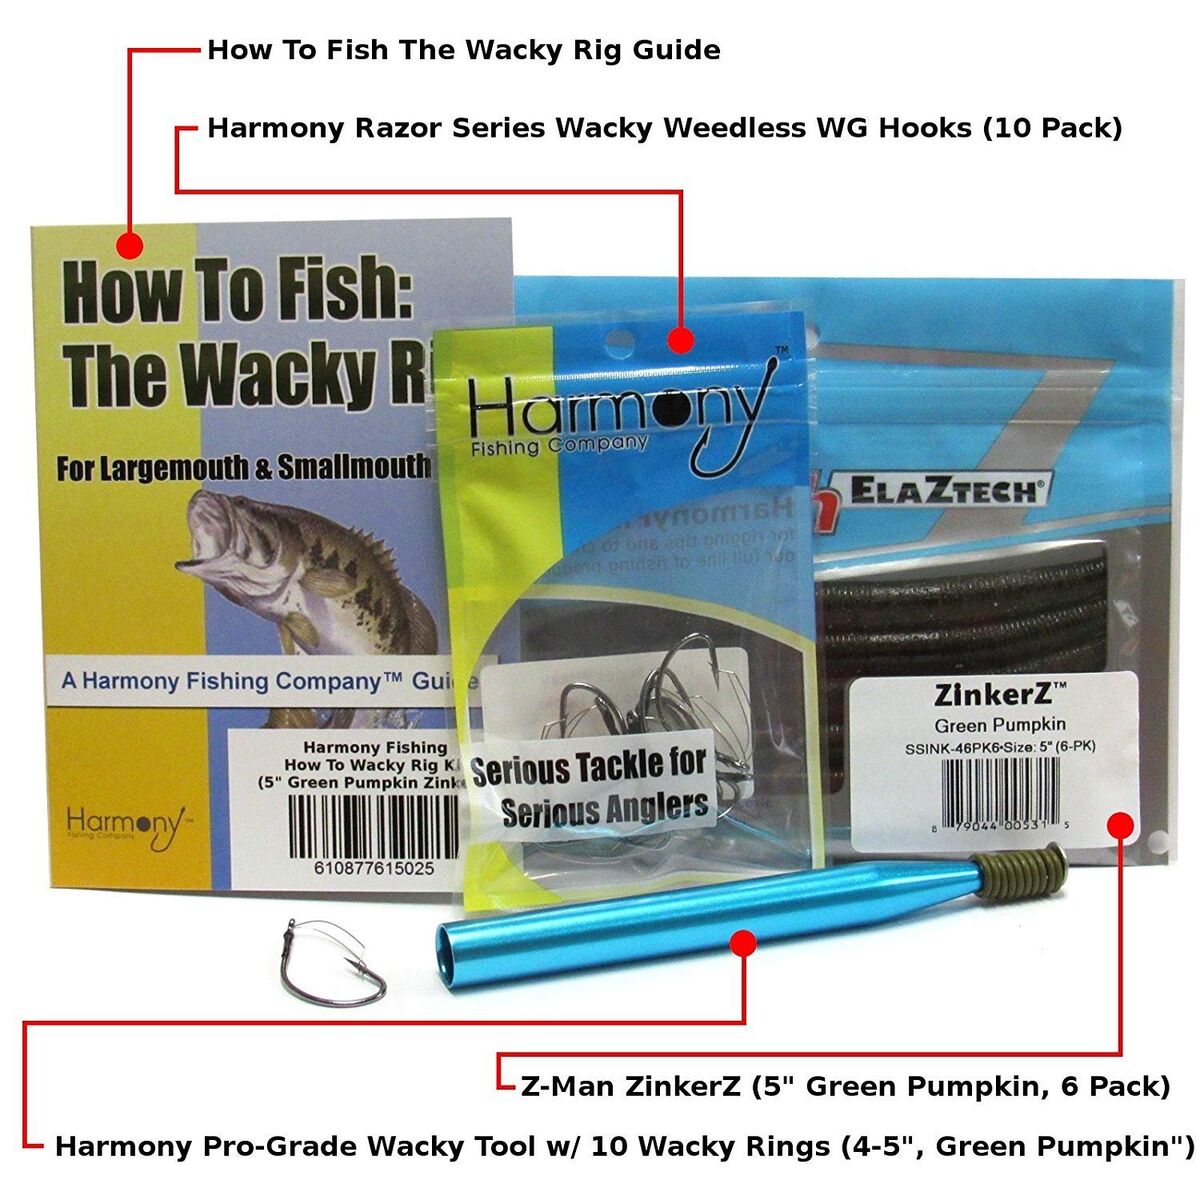 Wacky Rig Kit - Z-Man ZinkerZ 6pk + Wacky Weedless Hooks 10pk + Wacky Tool w/10 Wacky Rings + How to Fish The Wacky Worm Guide (Green Pumpkin)